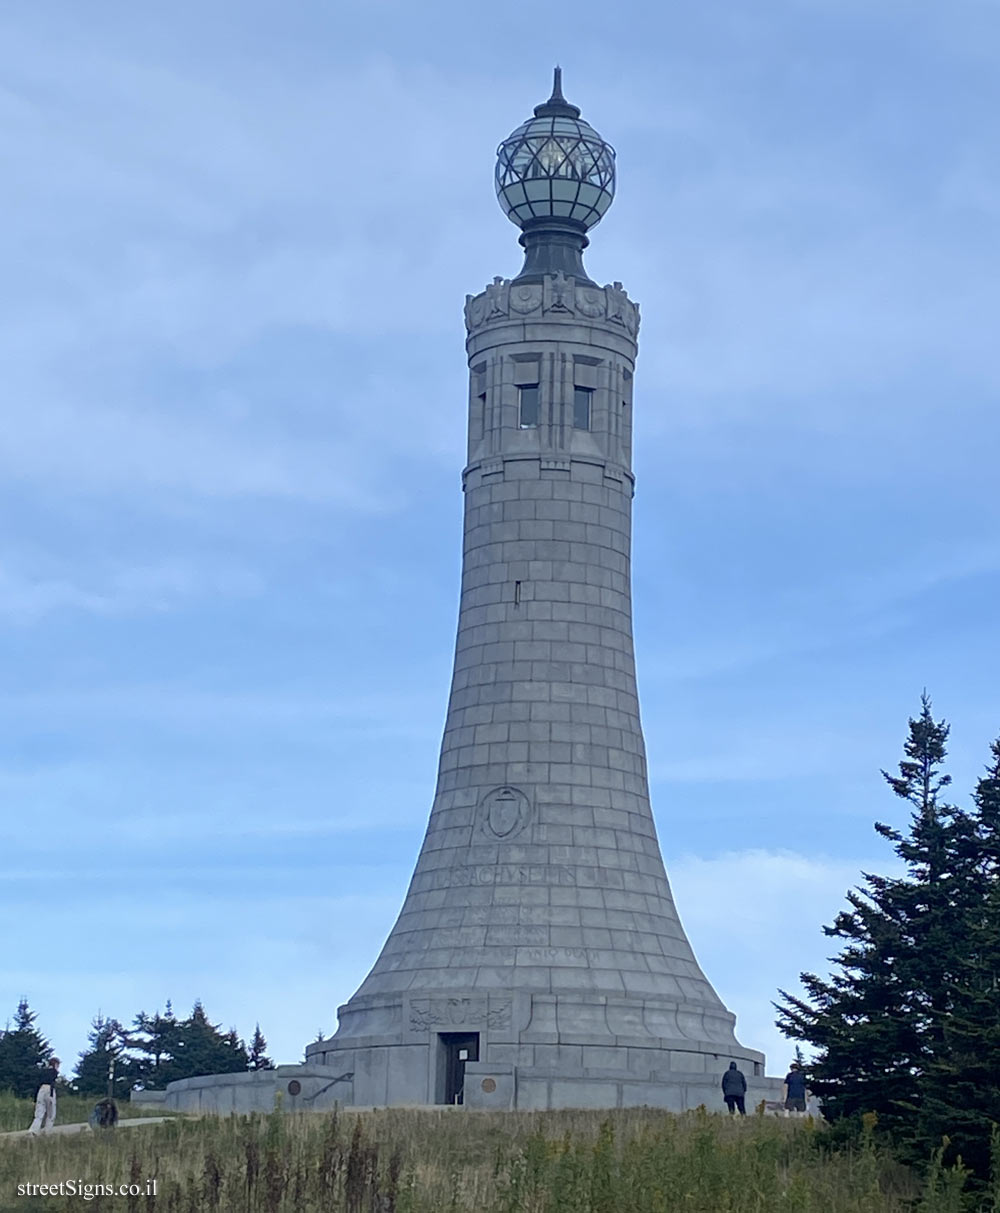 Adams, MA - World War I Memorial Tower - Mount Greylock State Reservation, Adams, MA 01220, USA